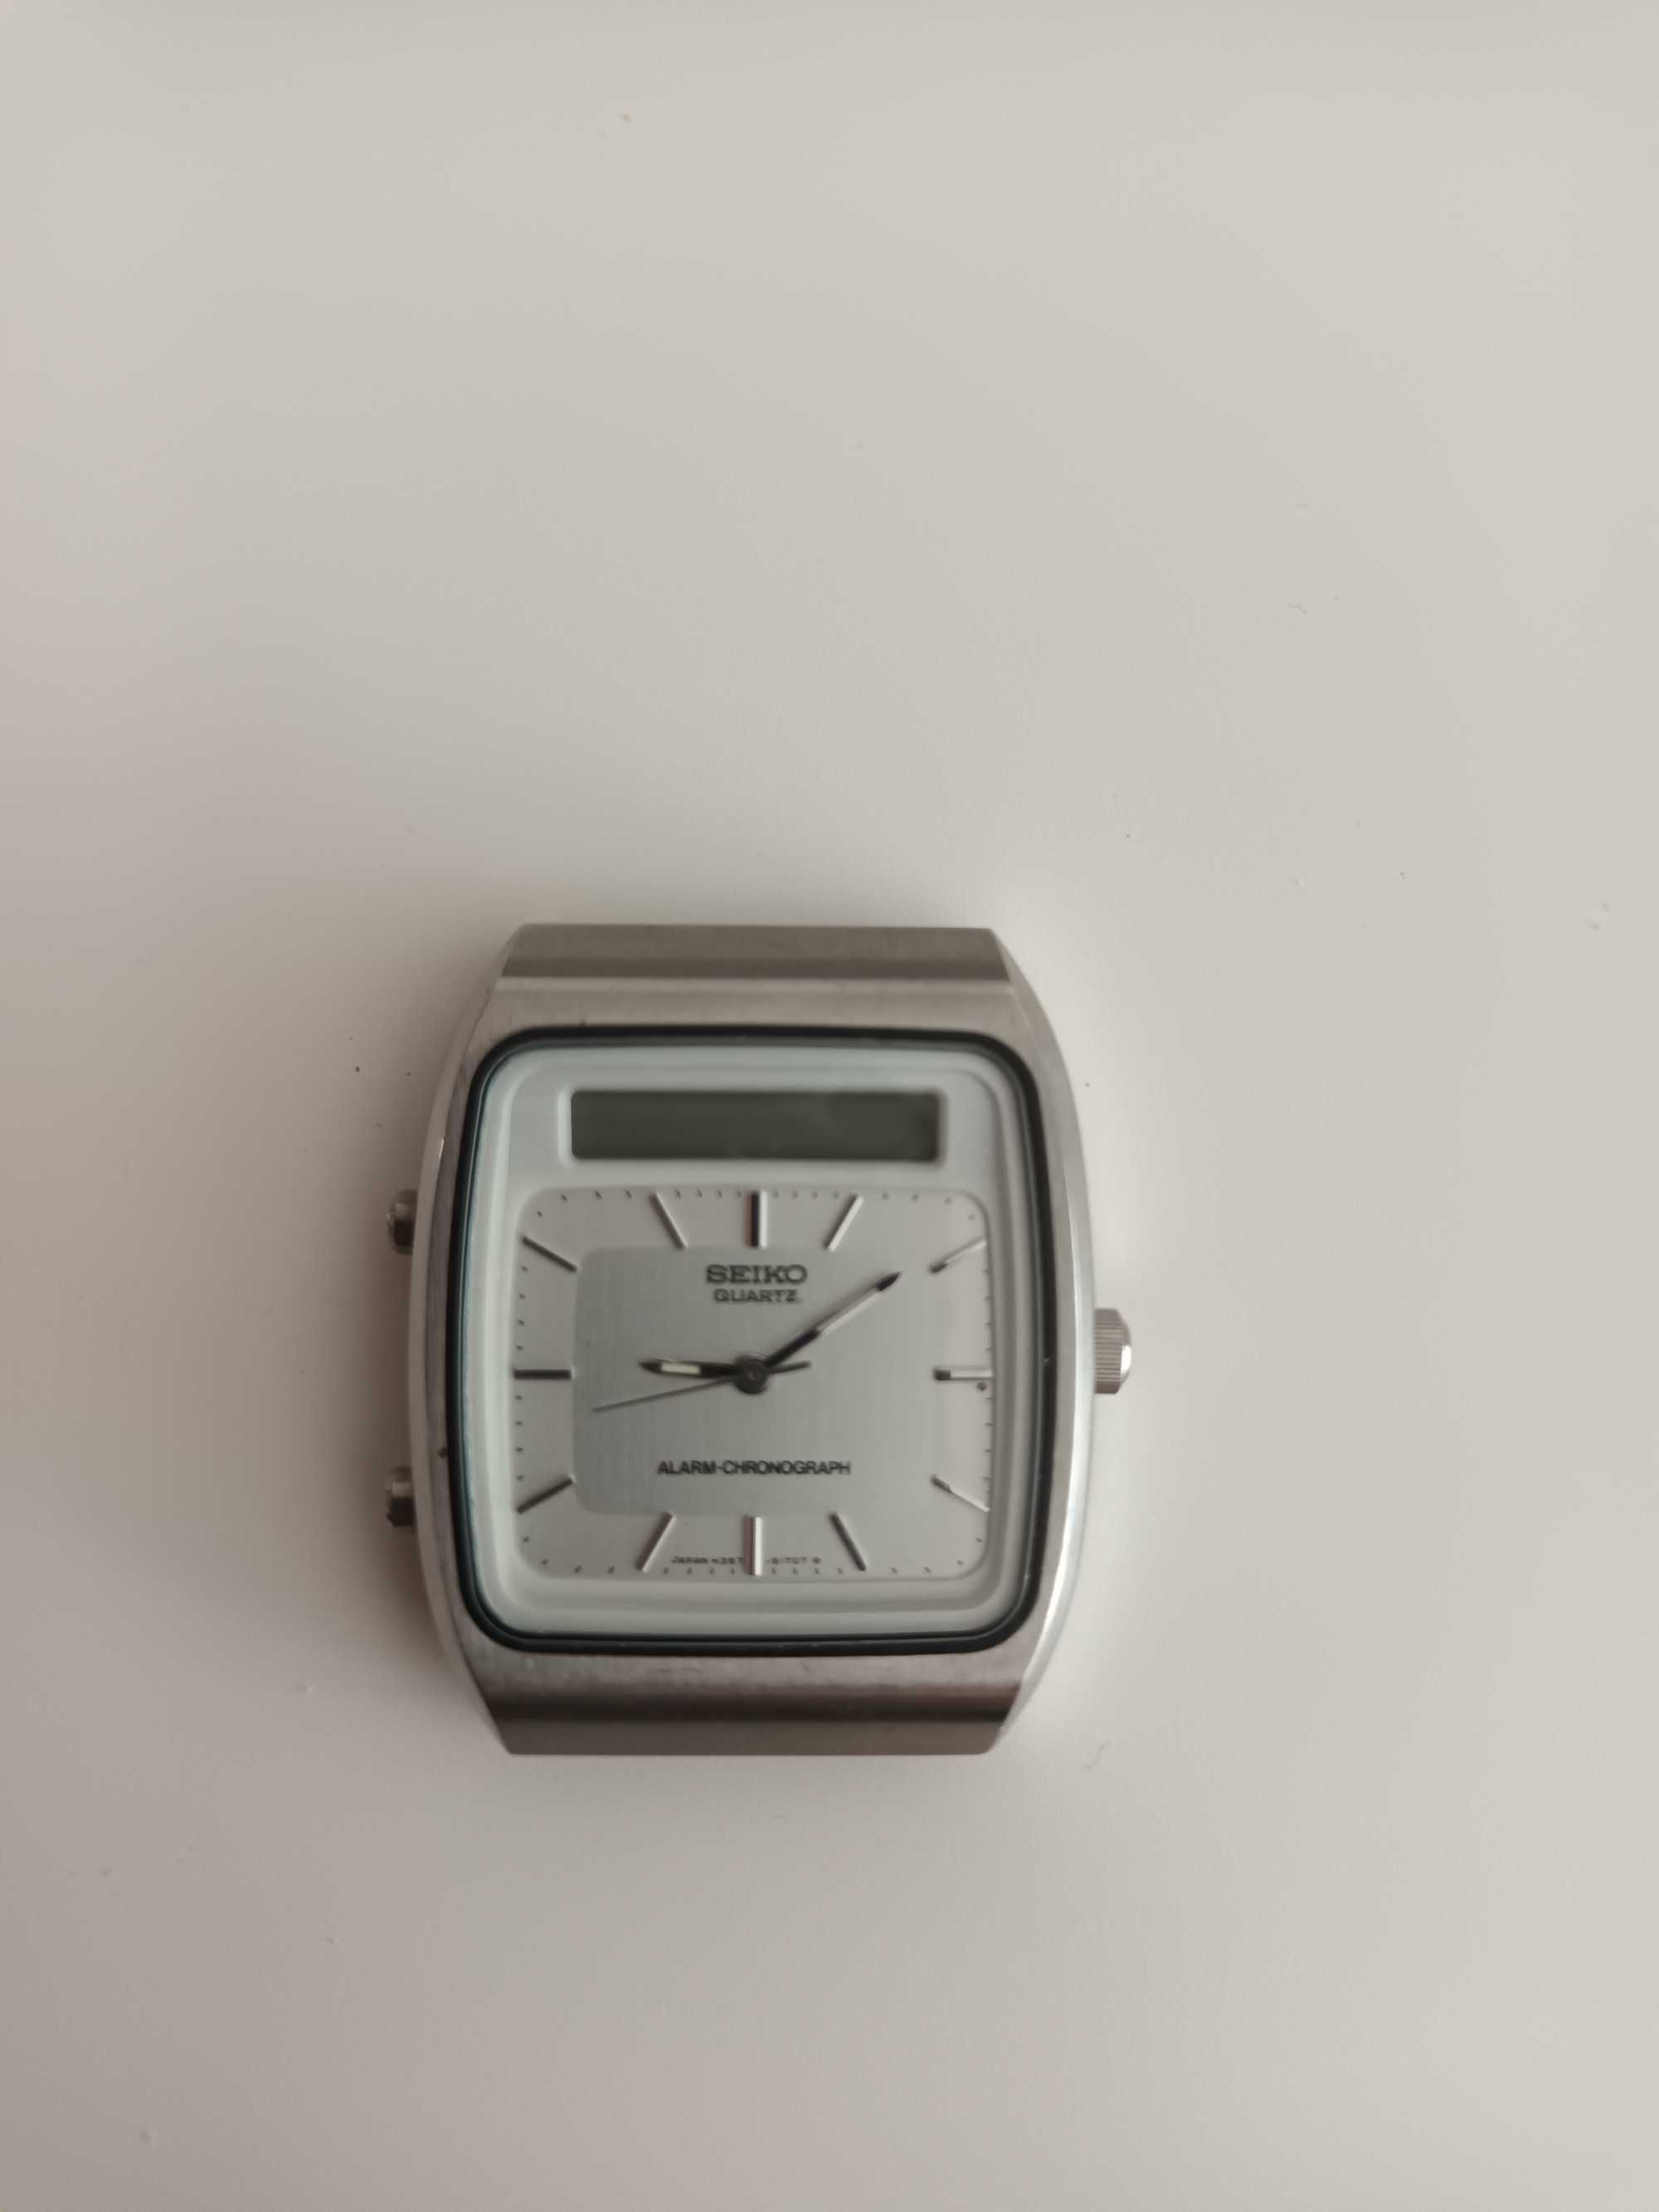 2 Relógios Seiko Quartz Alarme-Cronógrafo